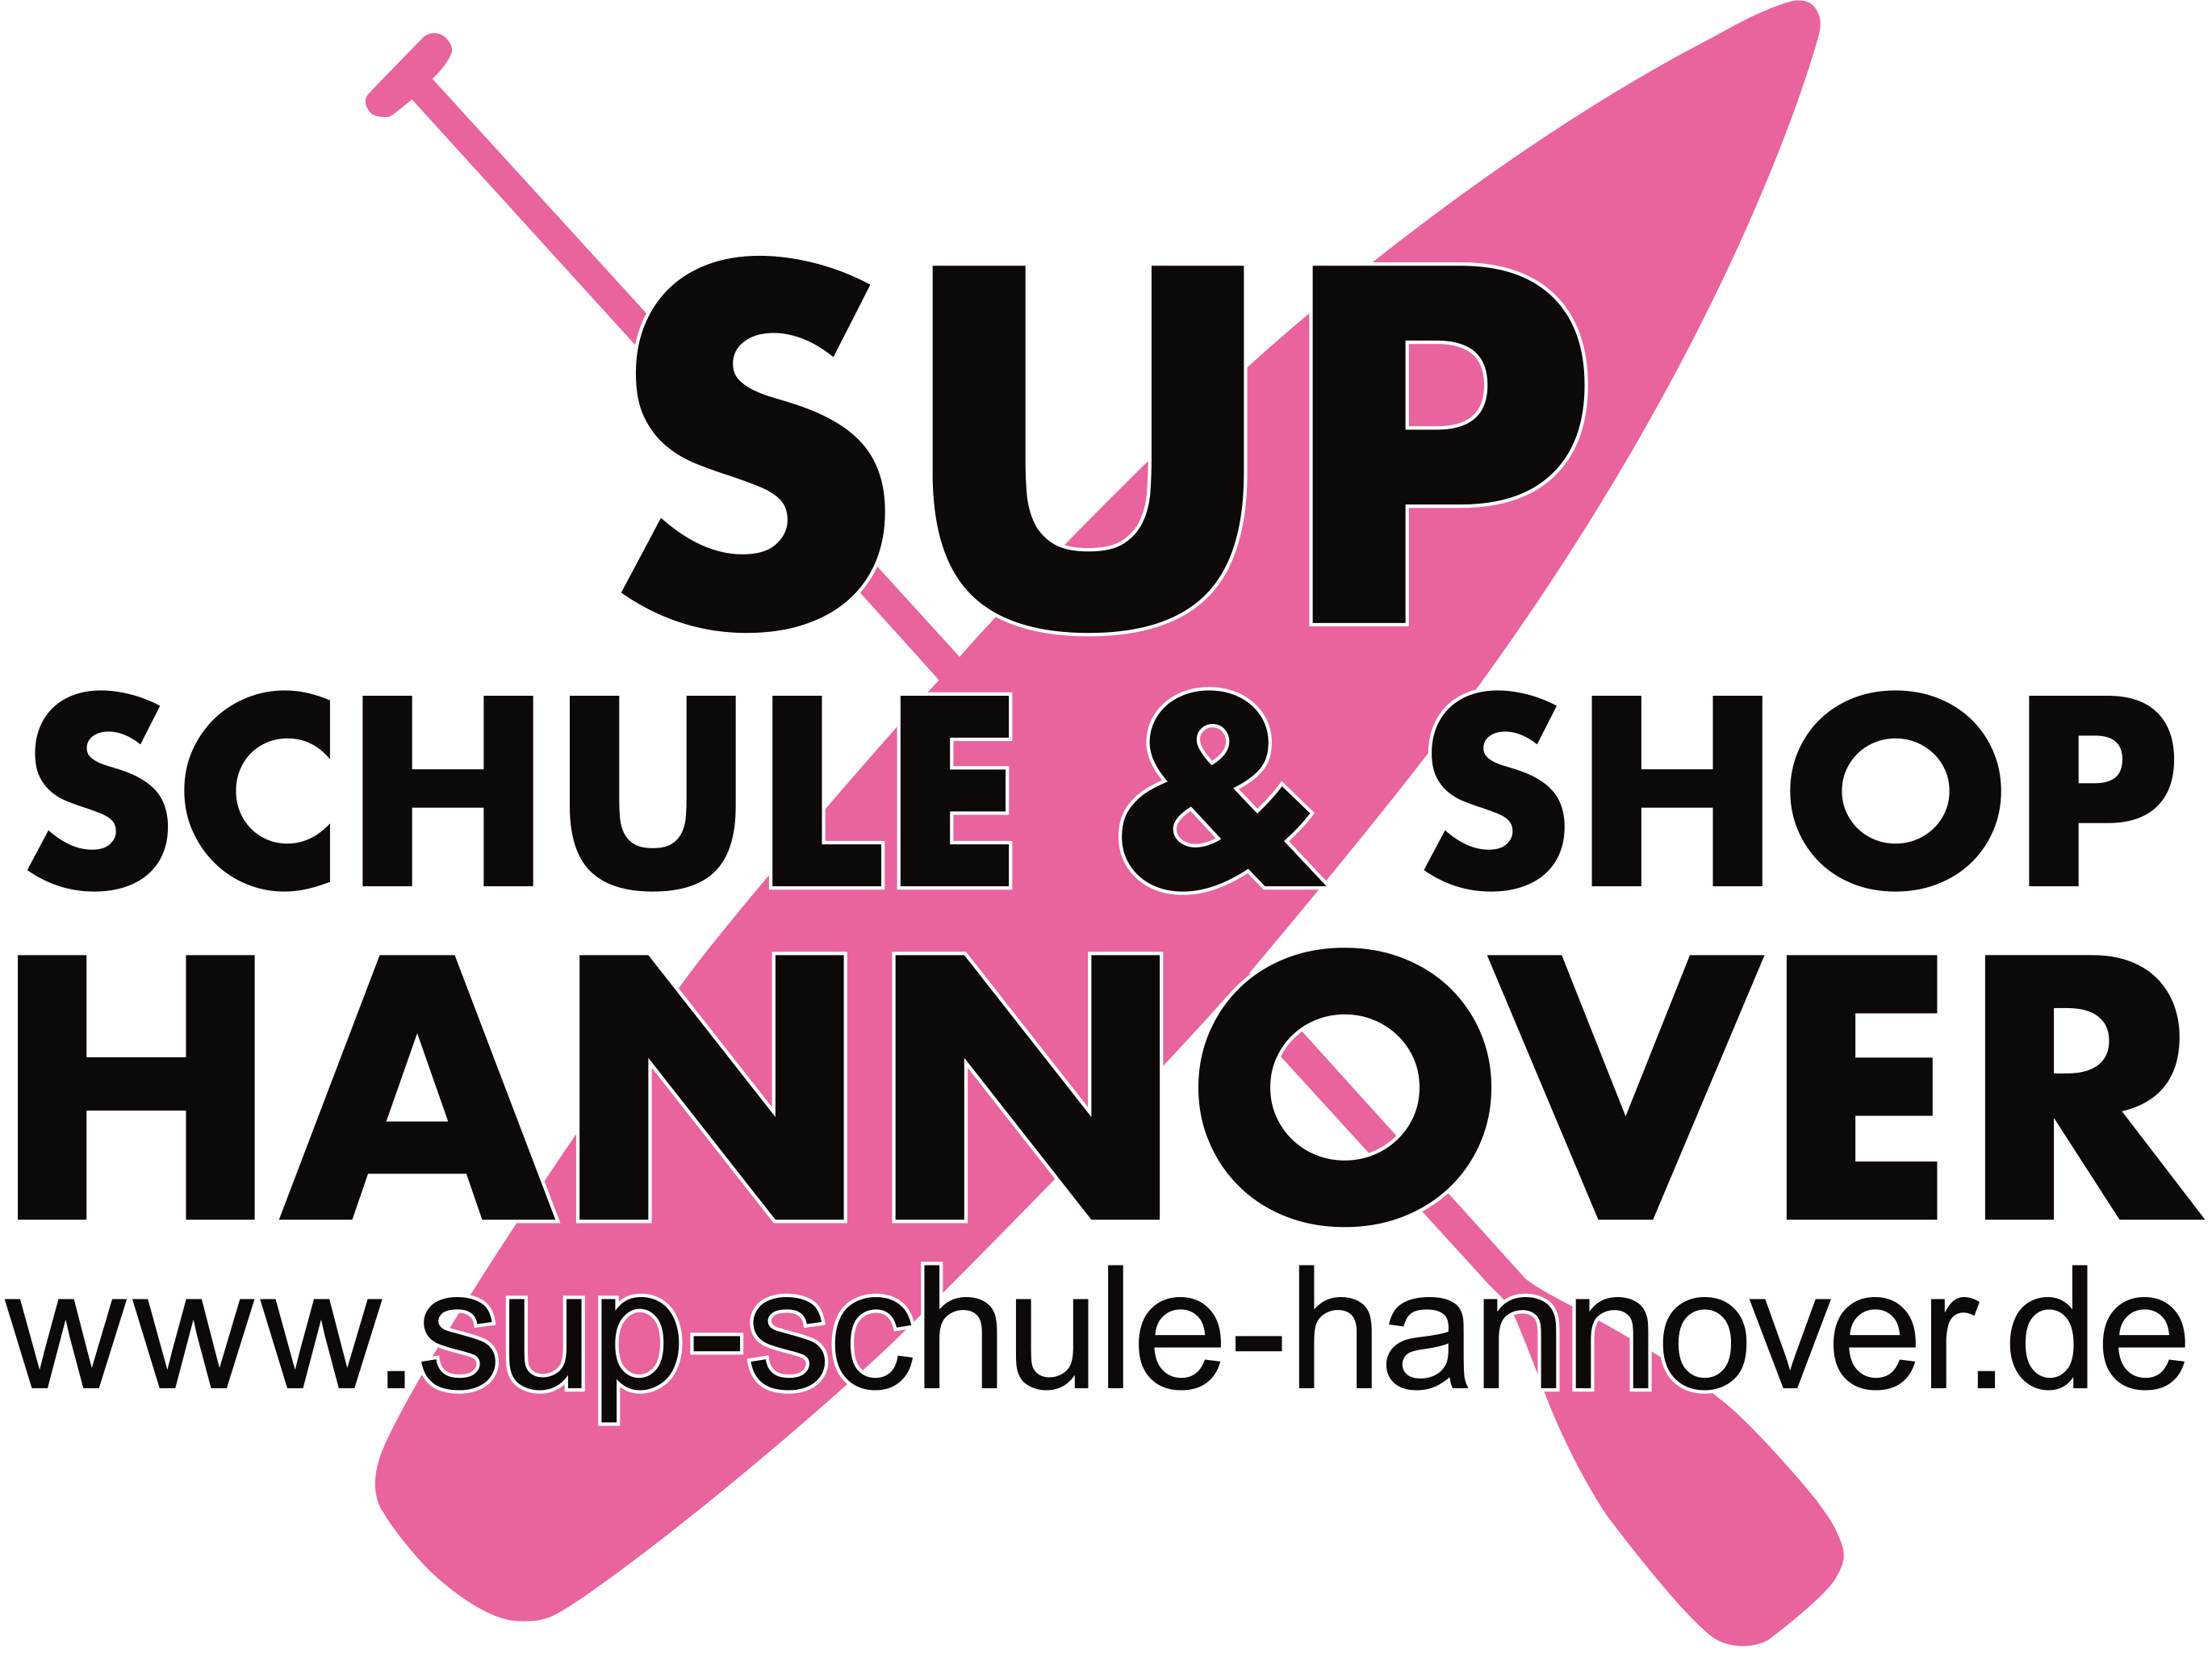 (c) Sup-schule-hannover.de